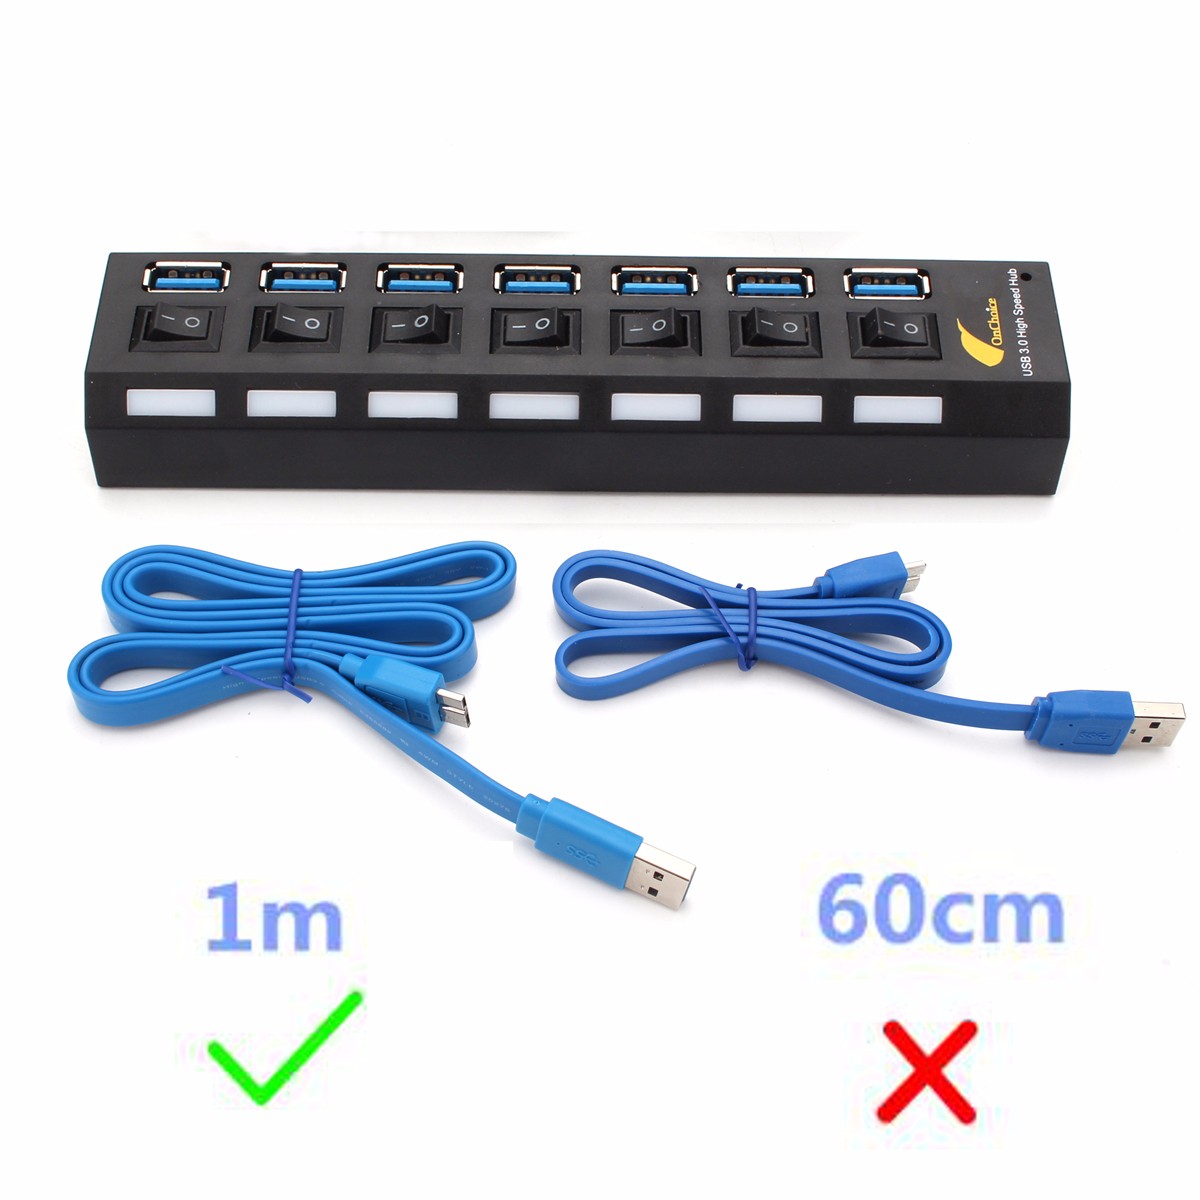 ONCHOICE 7Port USB 3.0 Hub On/Off Switch EU US UK AC Power Adapter For Laptop Desktop 15